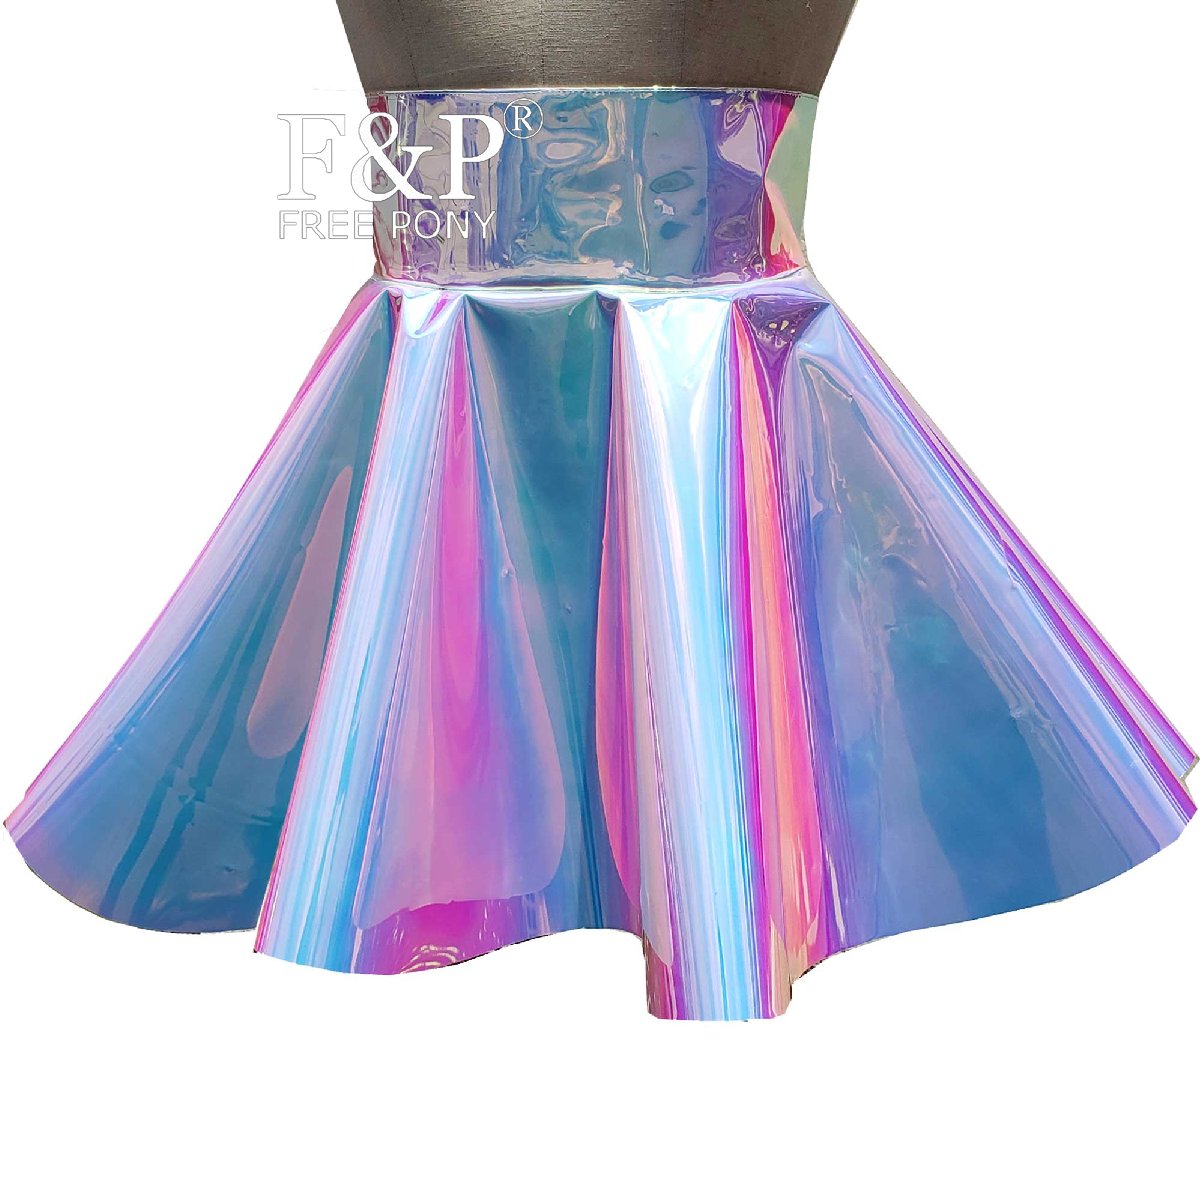 Holographic Rainbow Iridescent PVC High Waist Skirt - Ligth